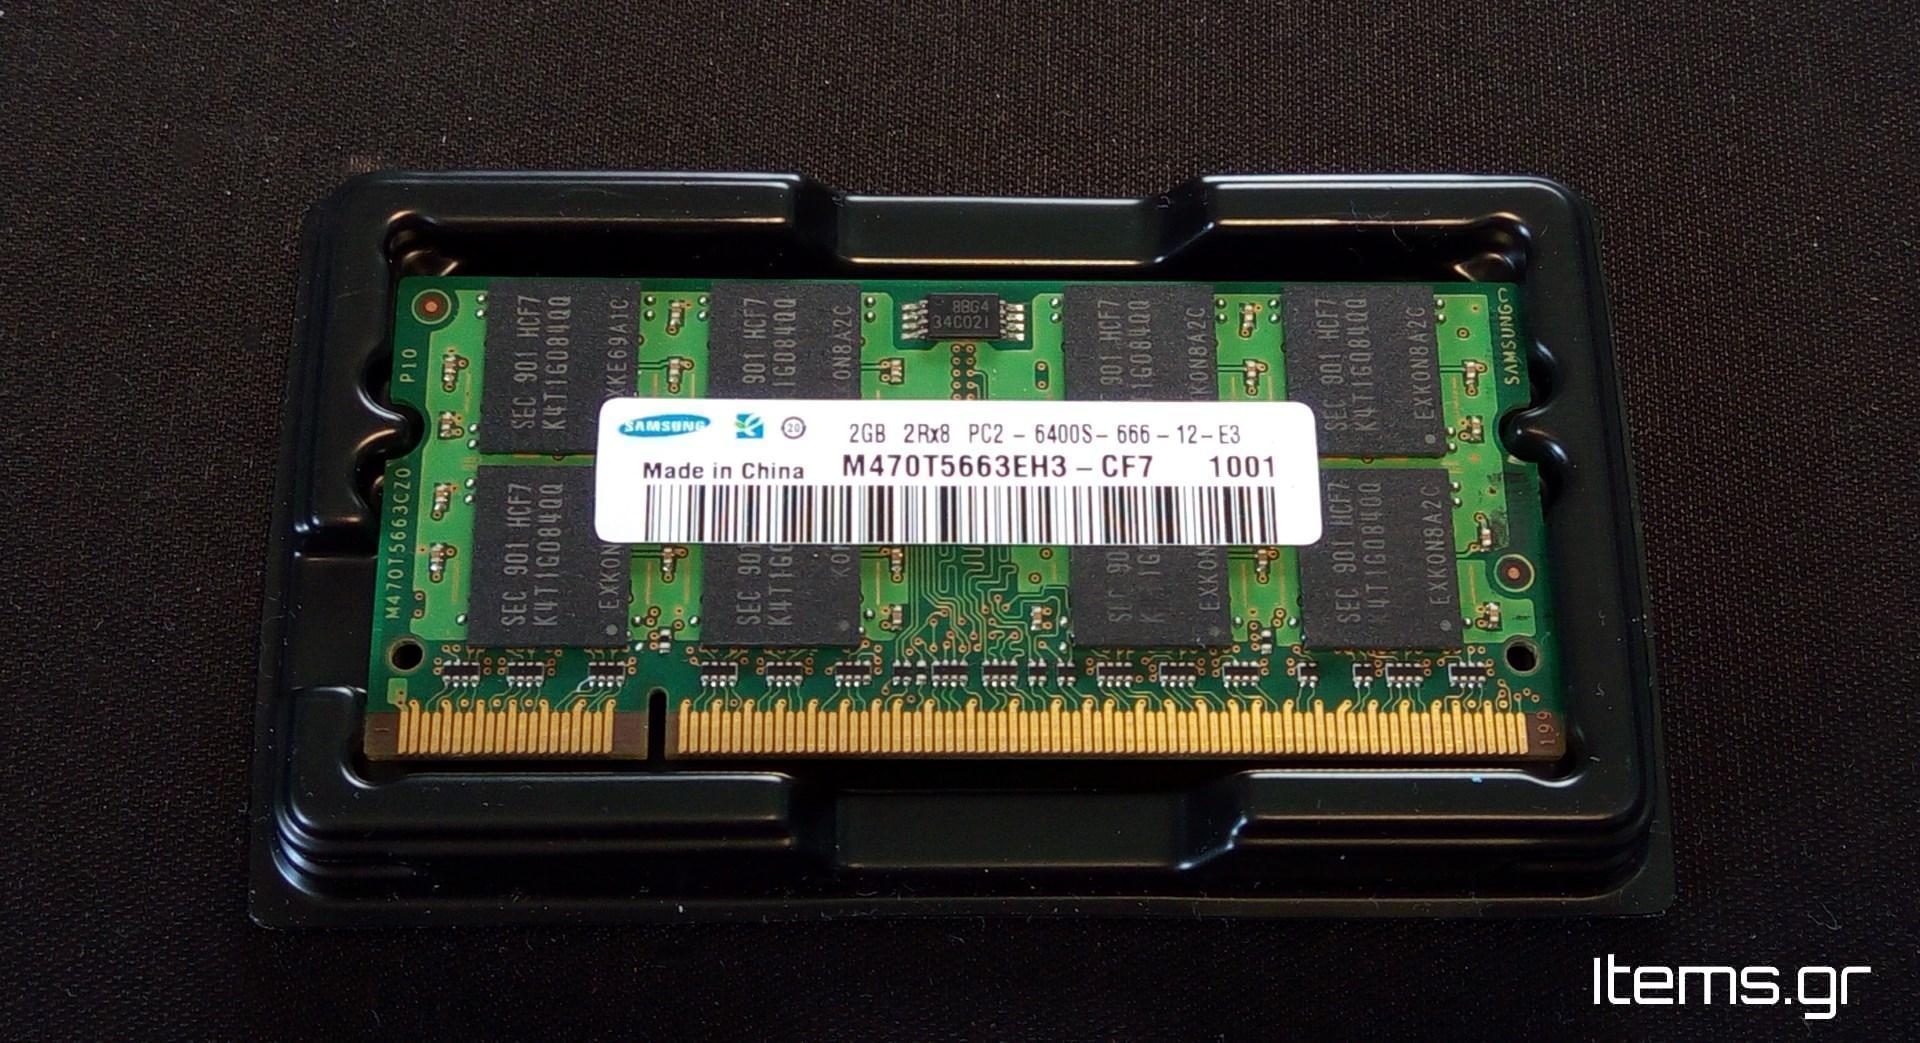 Samsung 2GB 2Rx8 PC2-6400S-666-12-E3 DDR2 800Mhz CL6 200pin SODIMM RAM